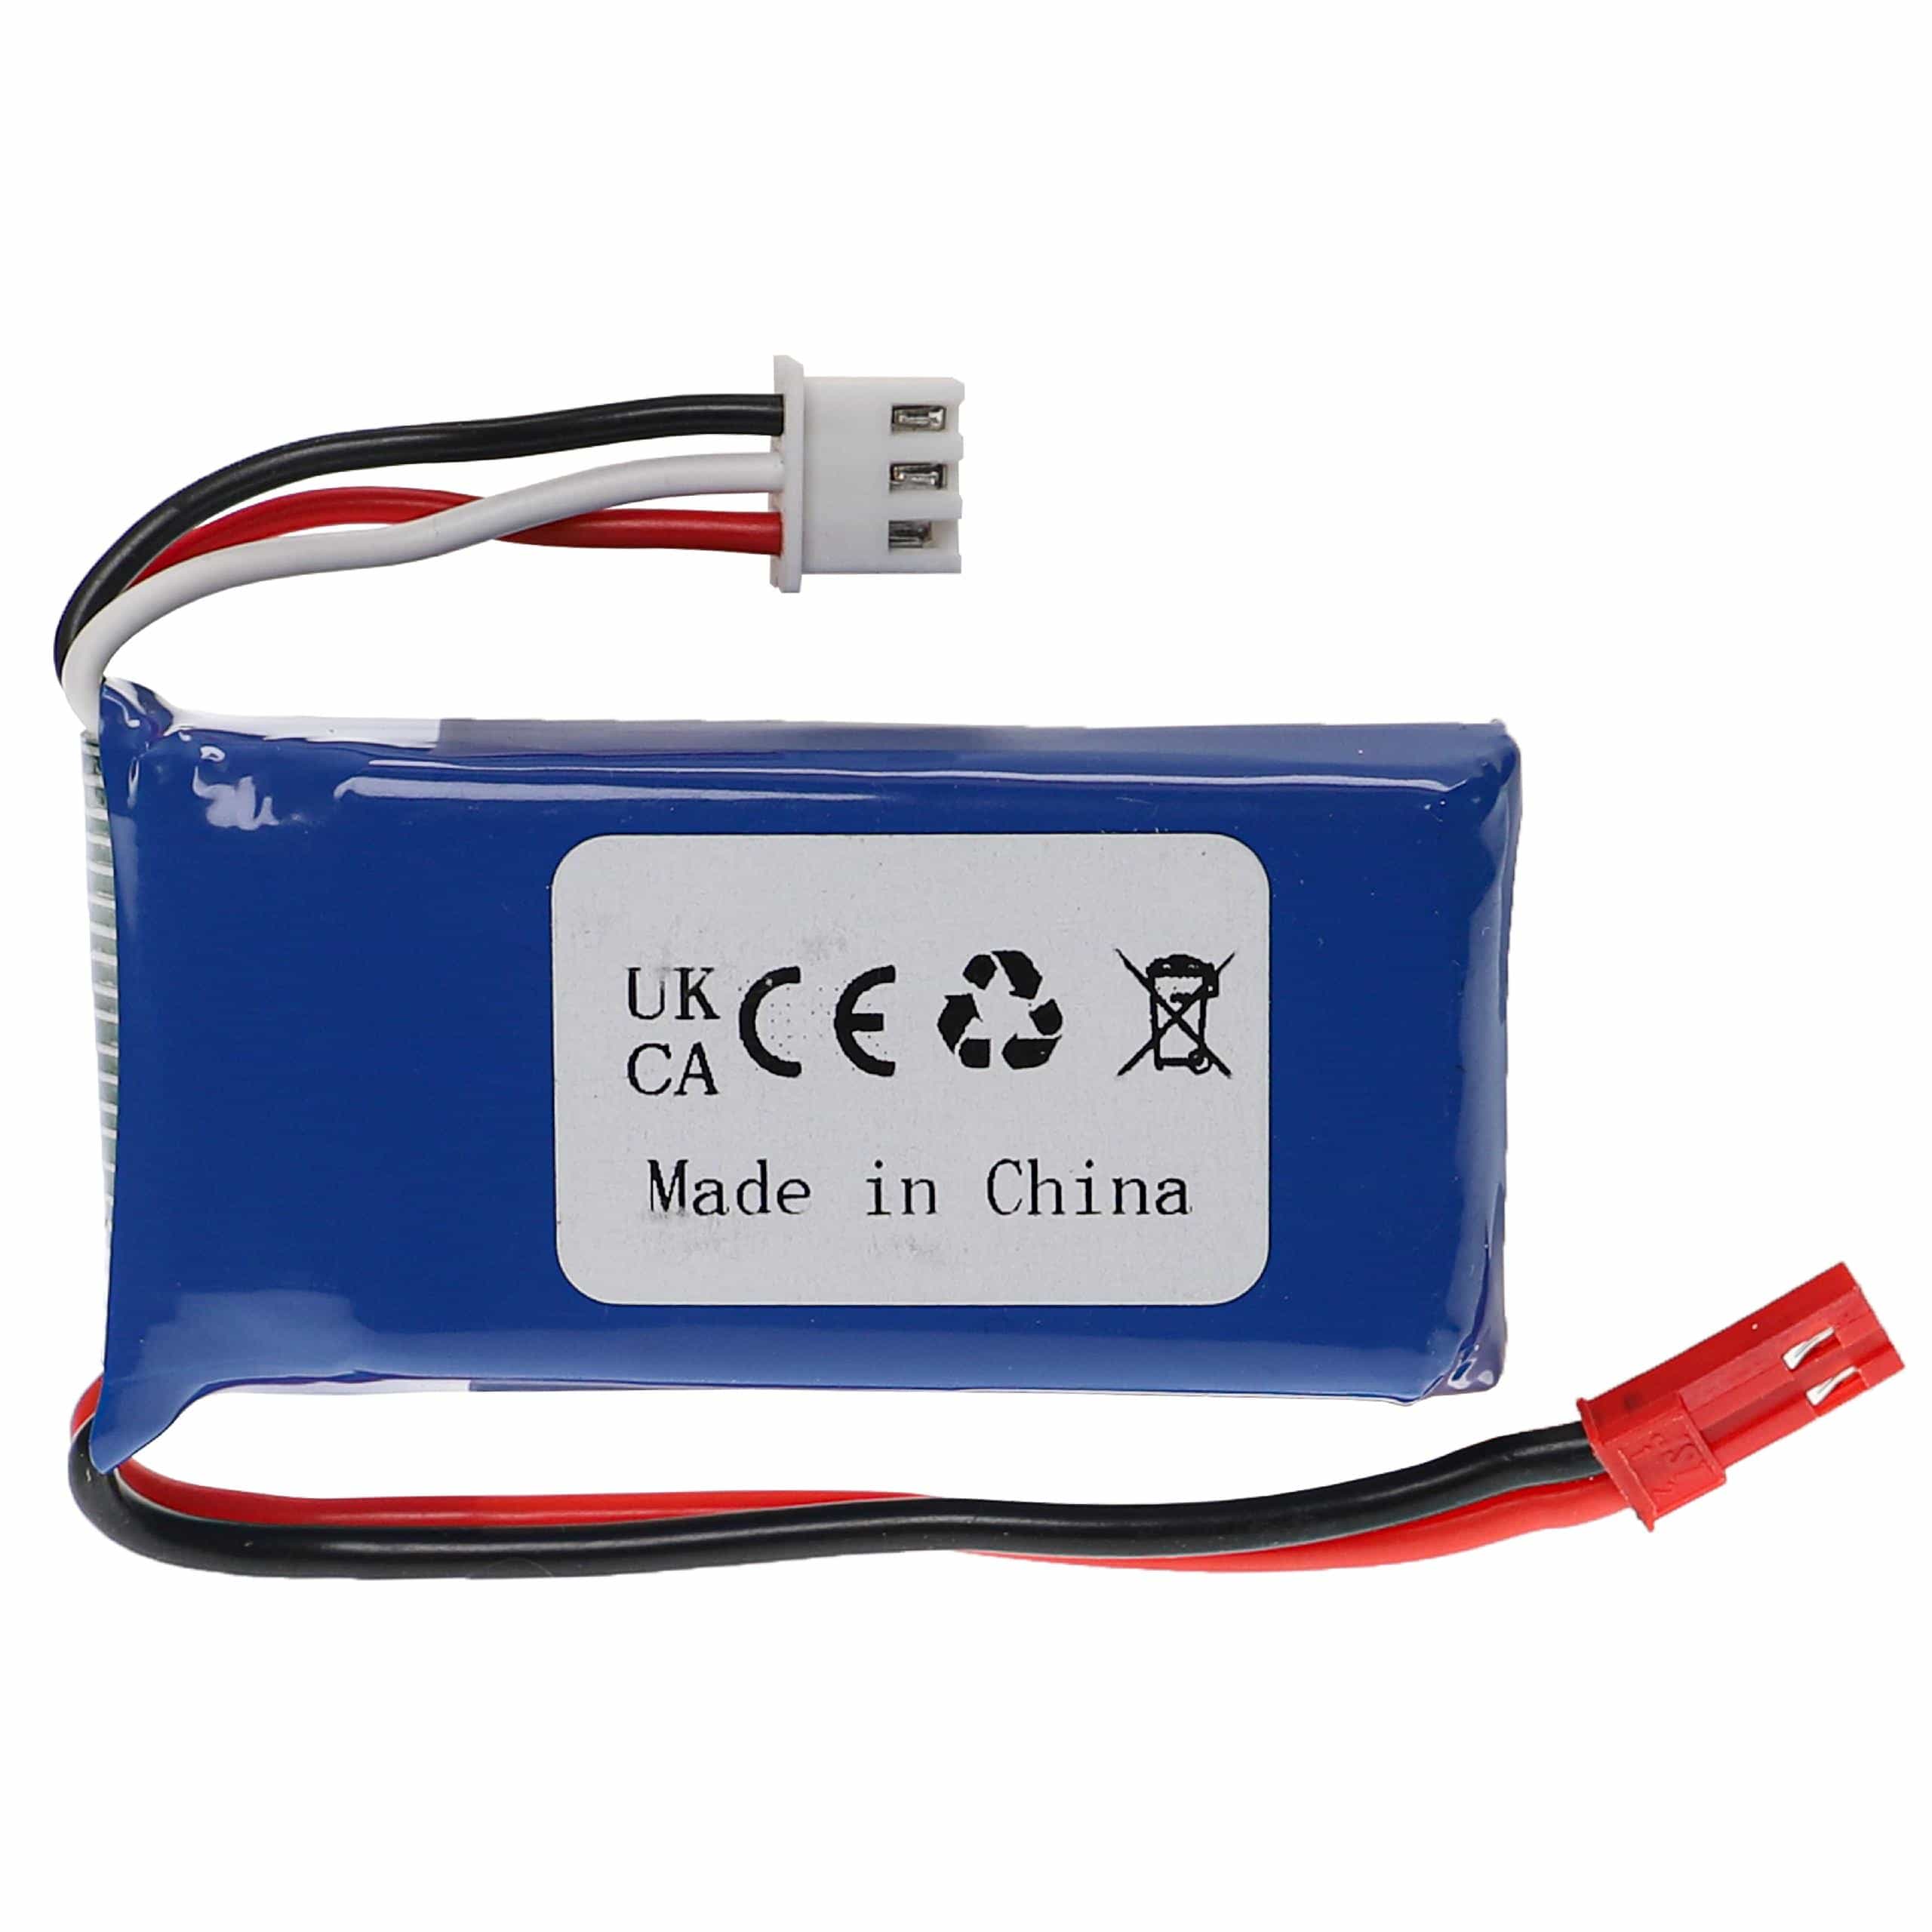 Batteria per modellini RC - 1200mAh 7,4V Li-Poly, BEC